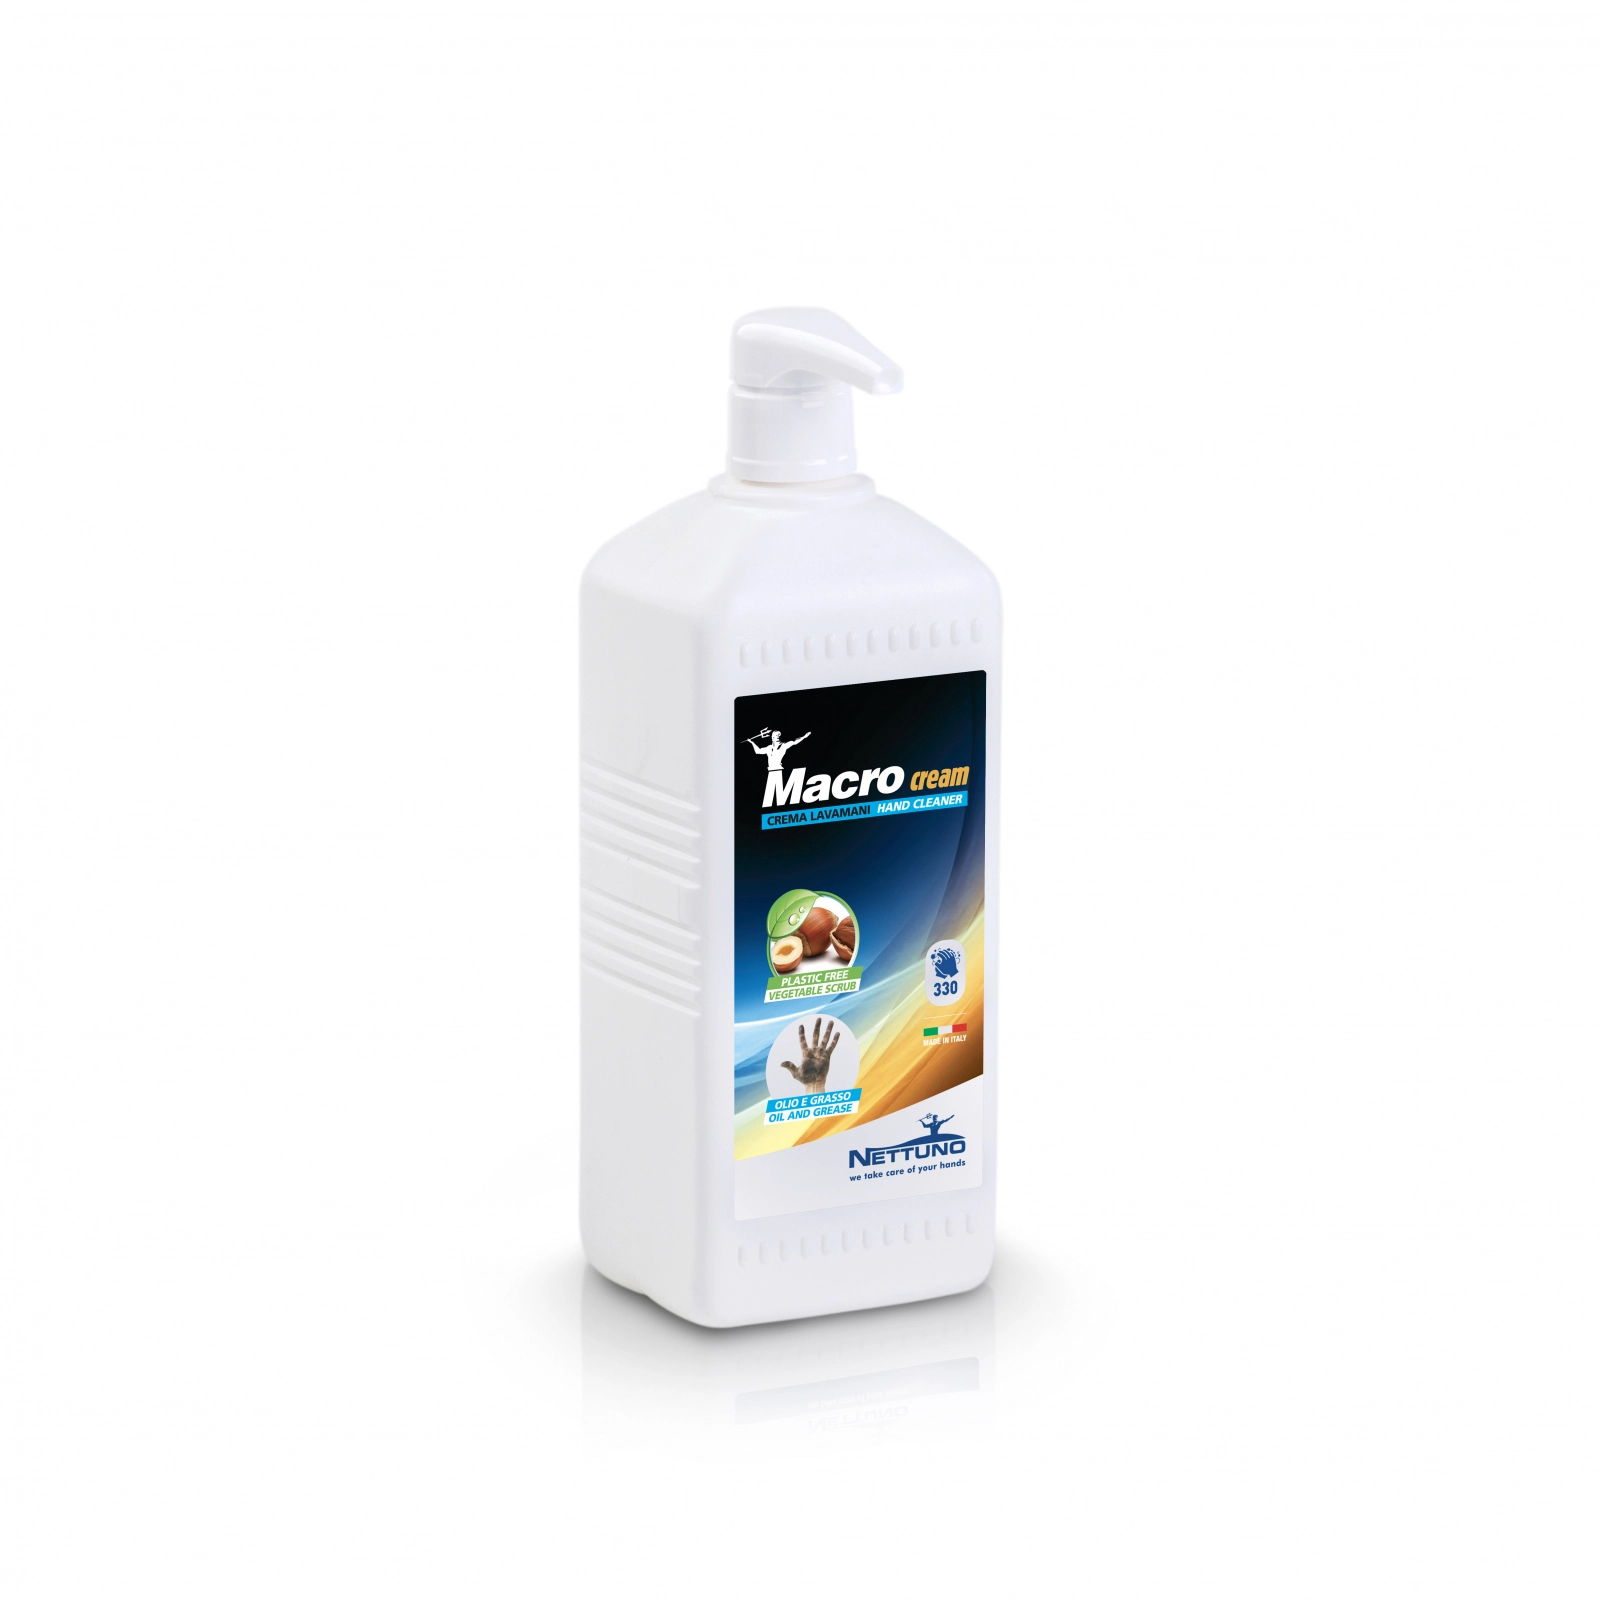 MacroCream - Crema cu abrazivi naturali de curatat mainile pentru murdarie persistenta 1000ml-330 spalari [1]